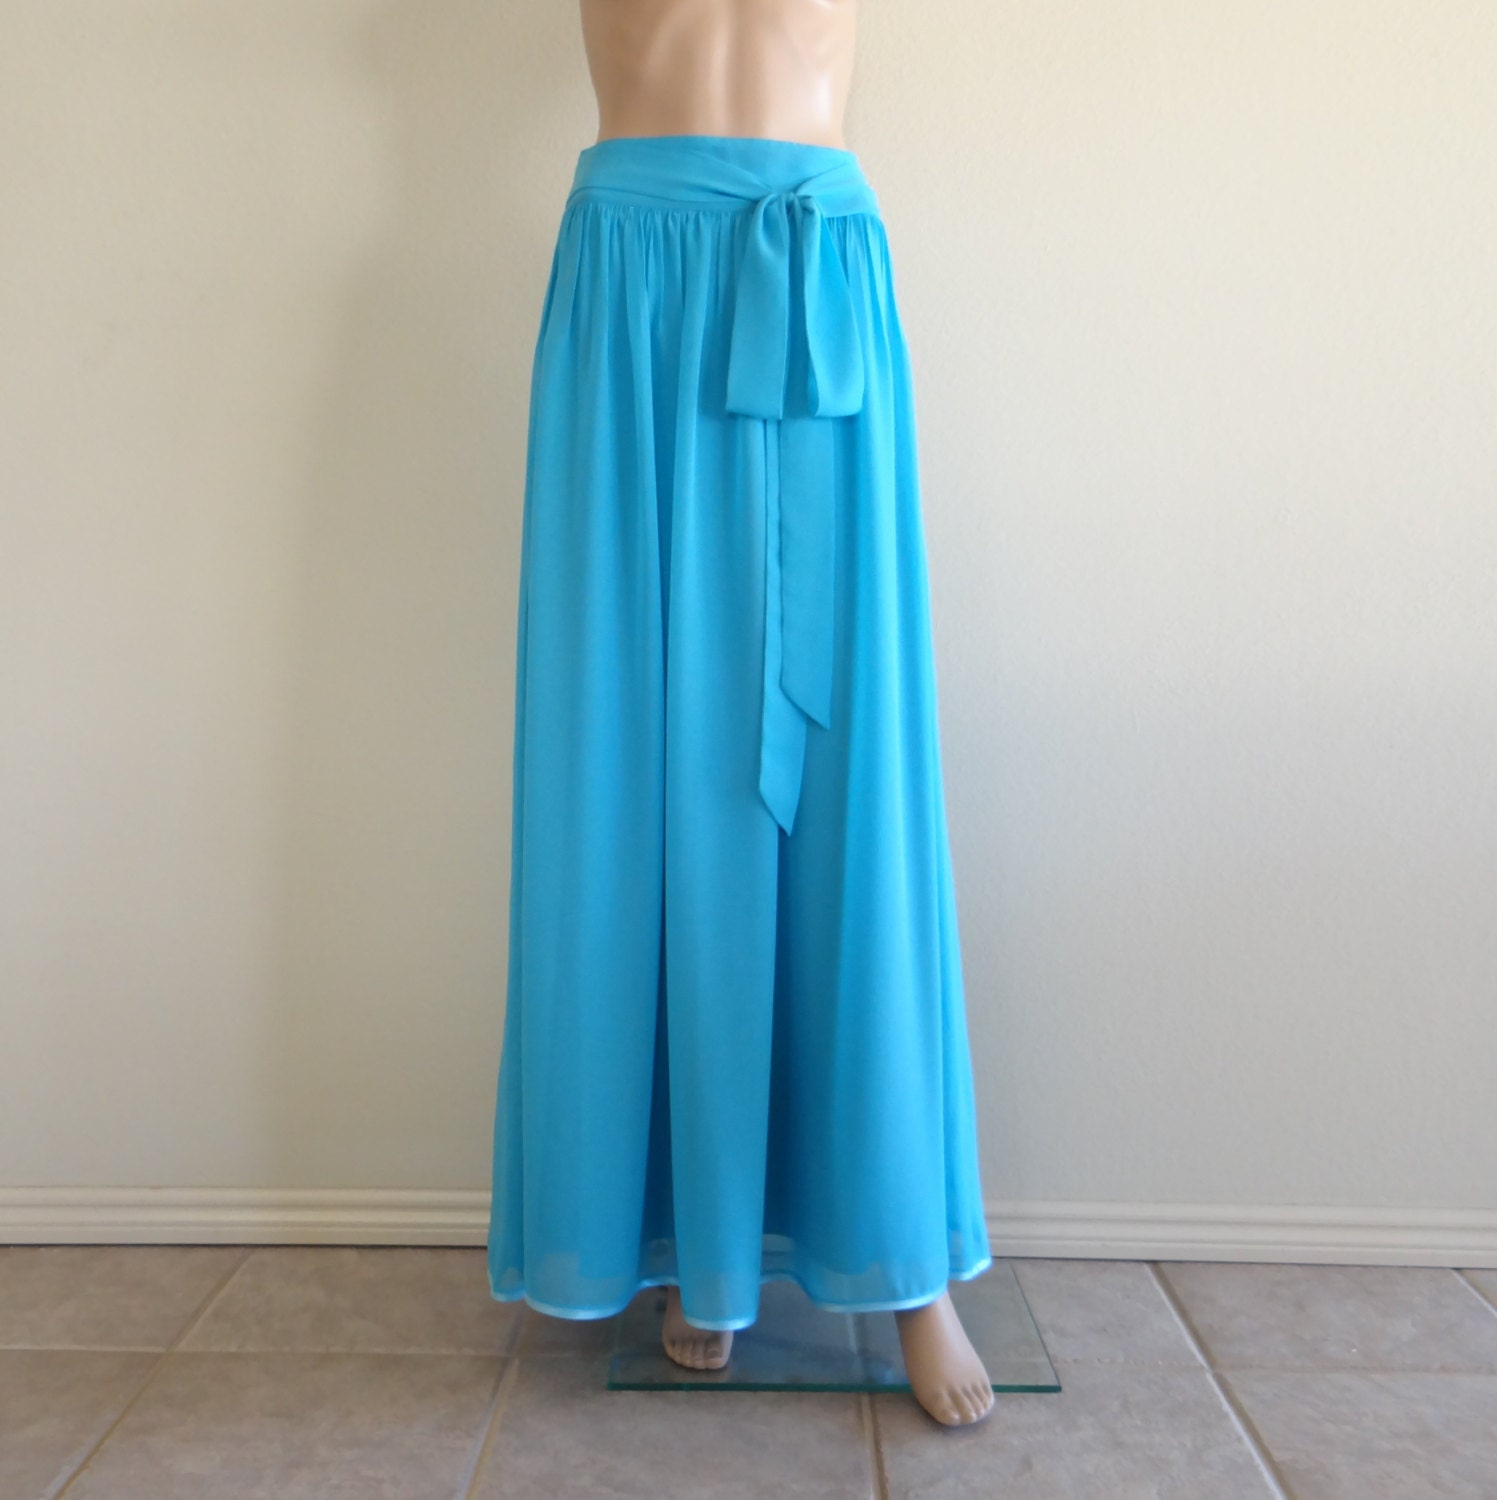 Sky Blue Maxi Skirt. Long Skirt by lynamobley2012 on Etsy